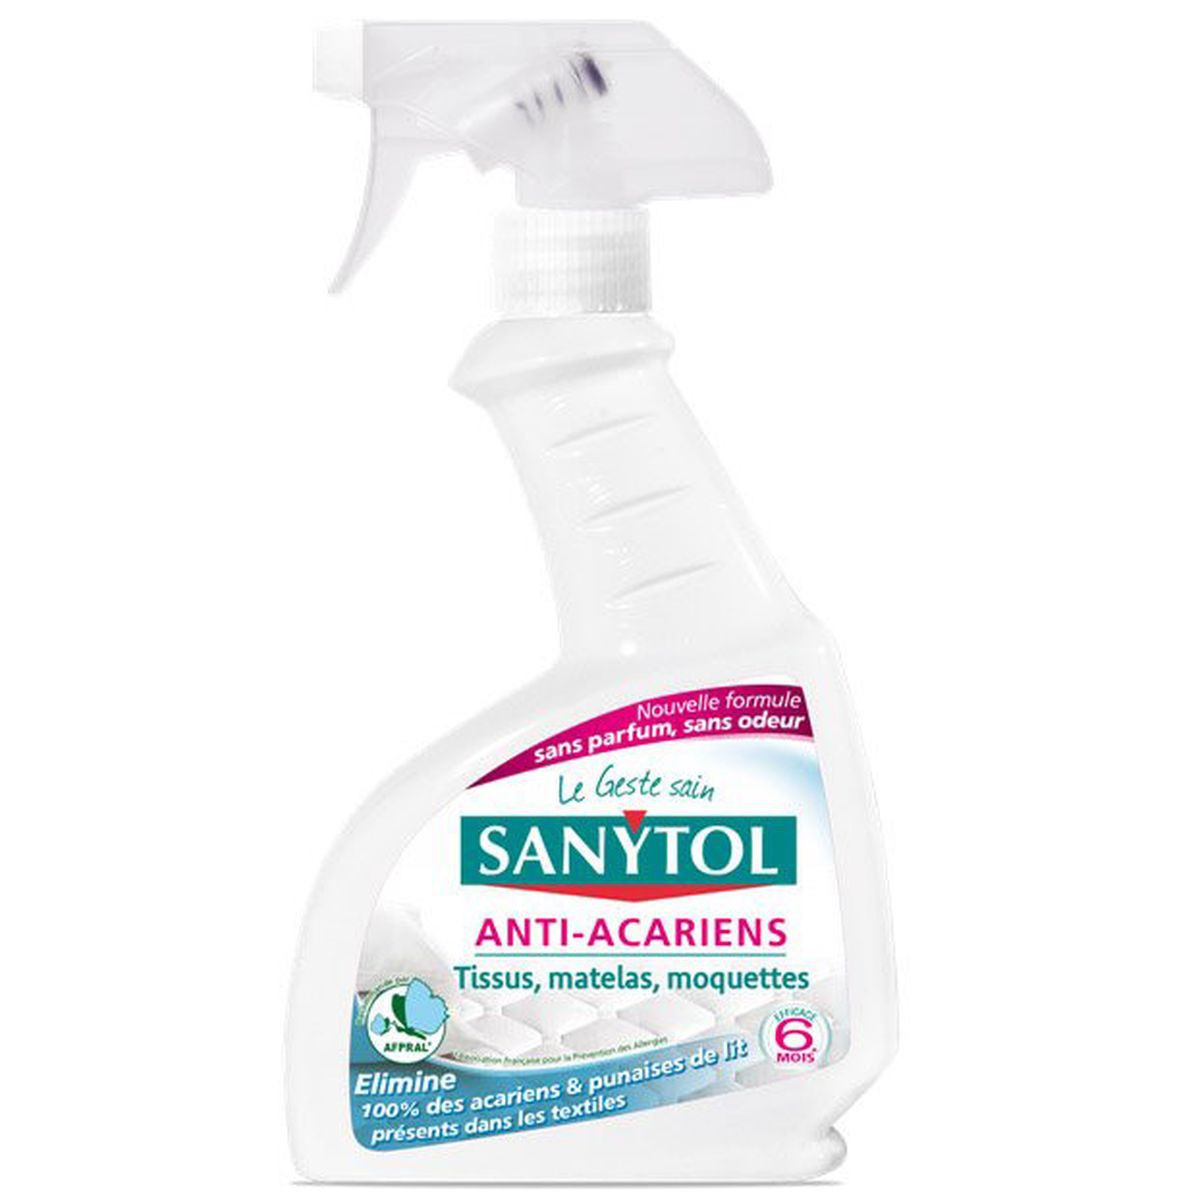 https://drhmarket.com/9566/sanytol-nettoyant-tissus-matelas-d%C3%A9sinfectant-anti-acariens-300-ml.jpg